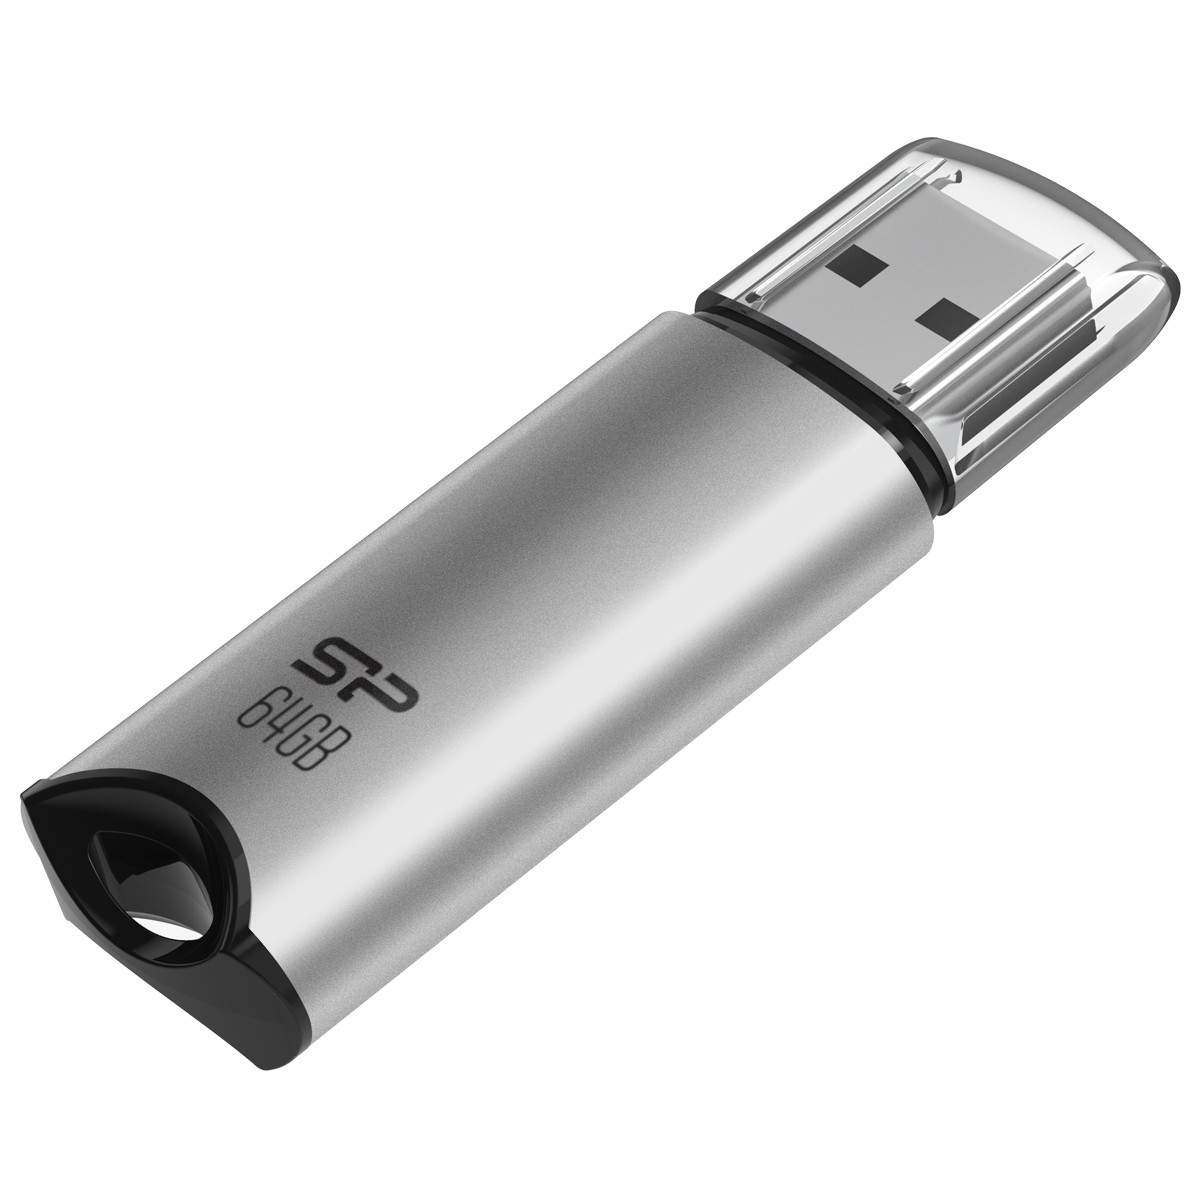 Silicon Power 64GB Marvel M02 USB 3.0 Flash Drive - Silver